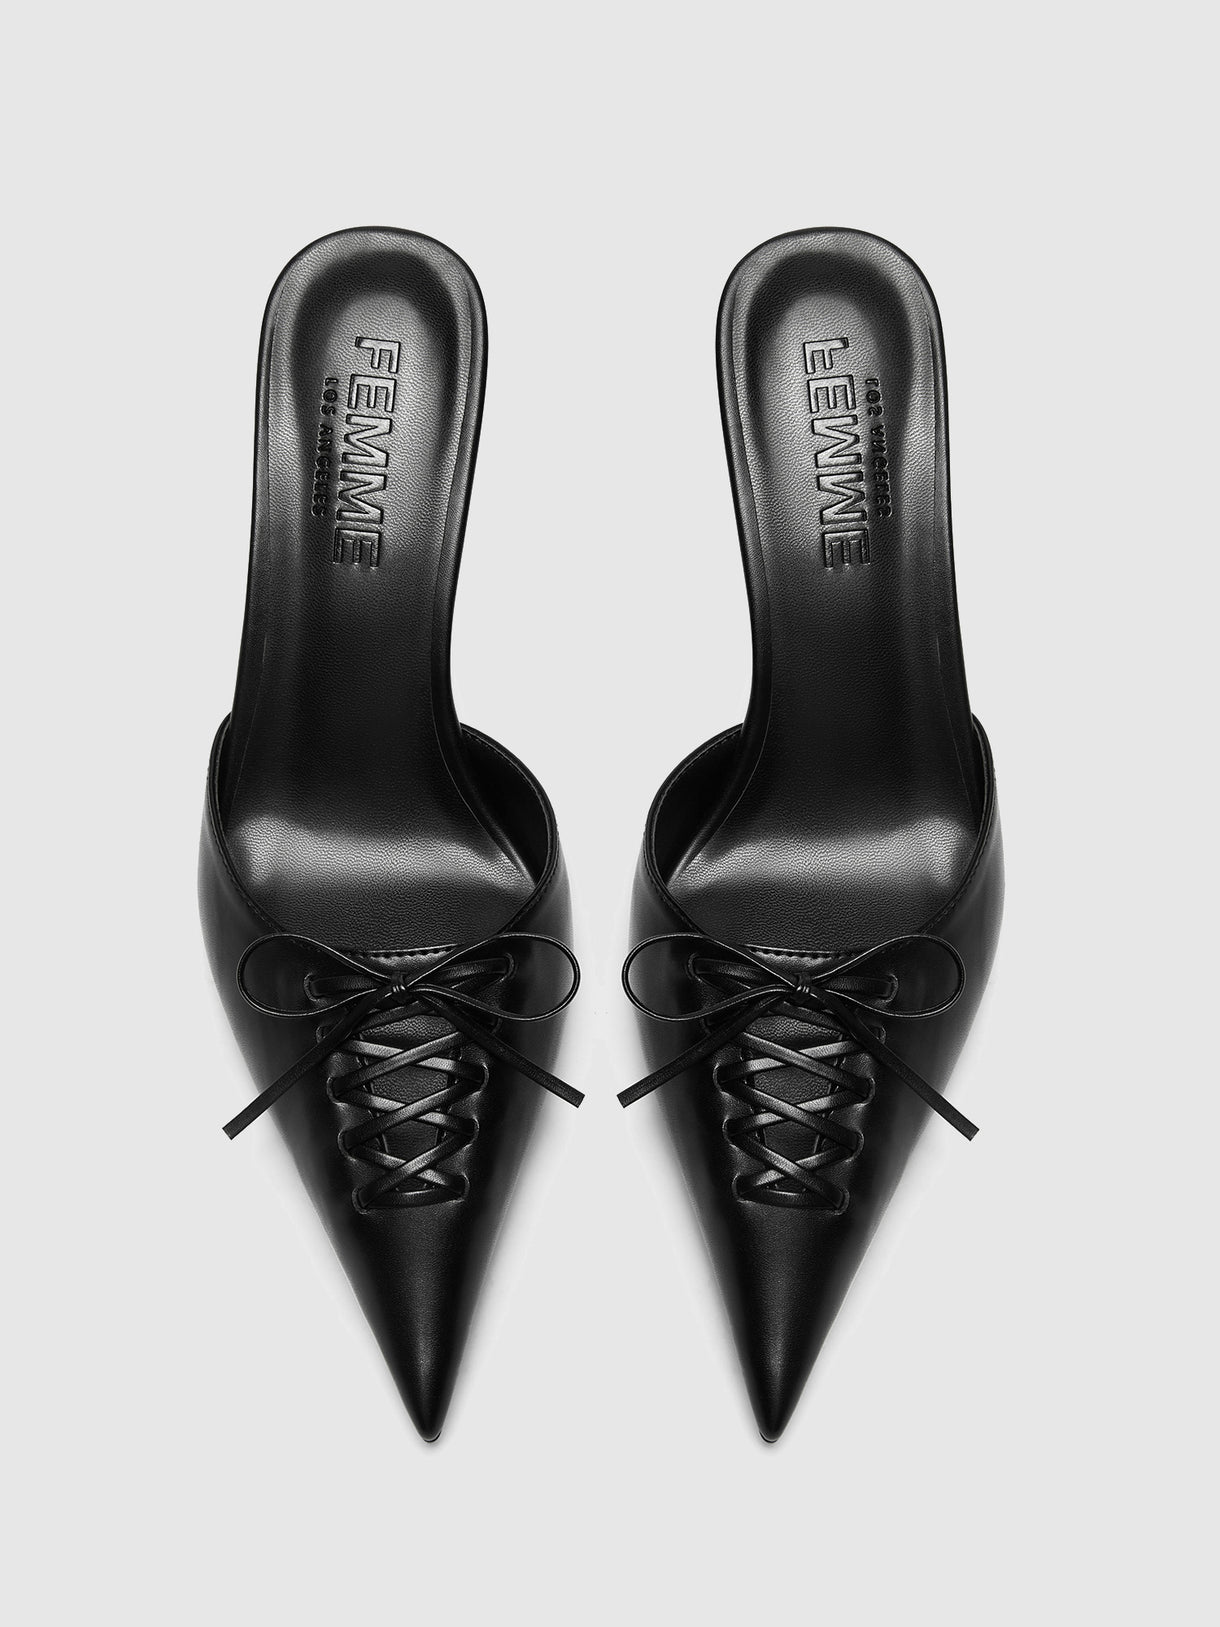 Designer Heels that are Vegan, Ethically made & Cruelty Free– Femme LA